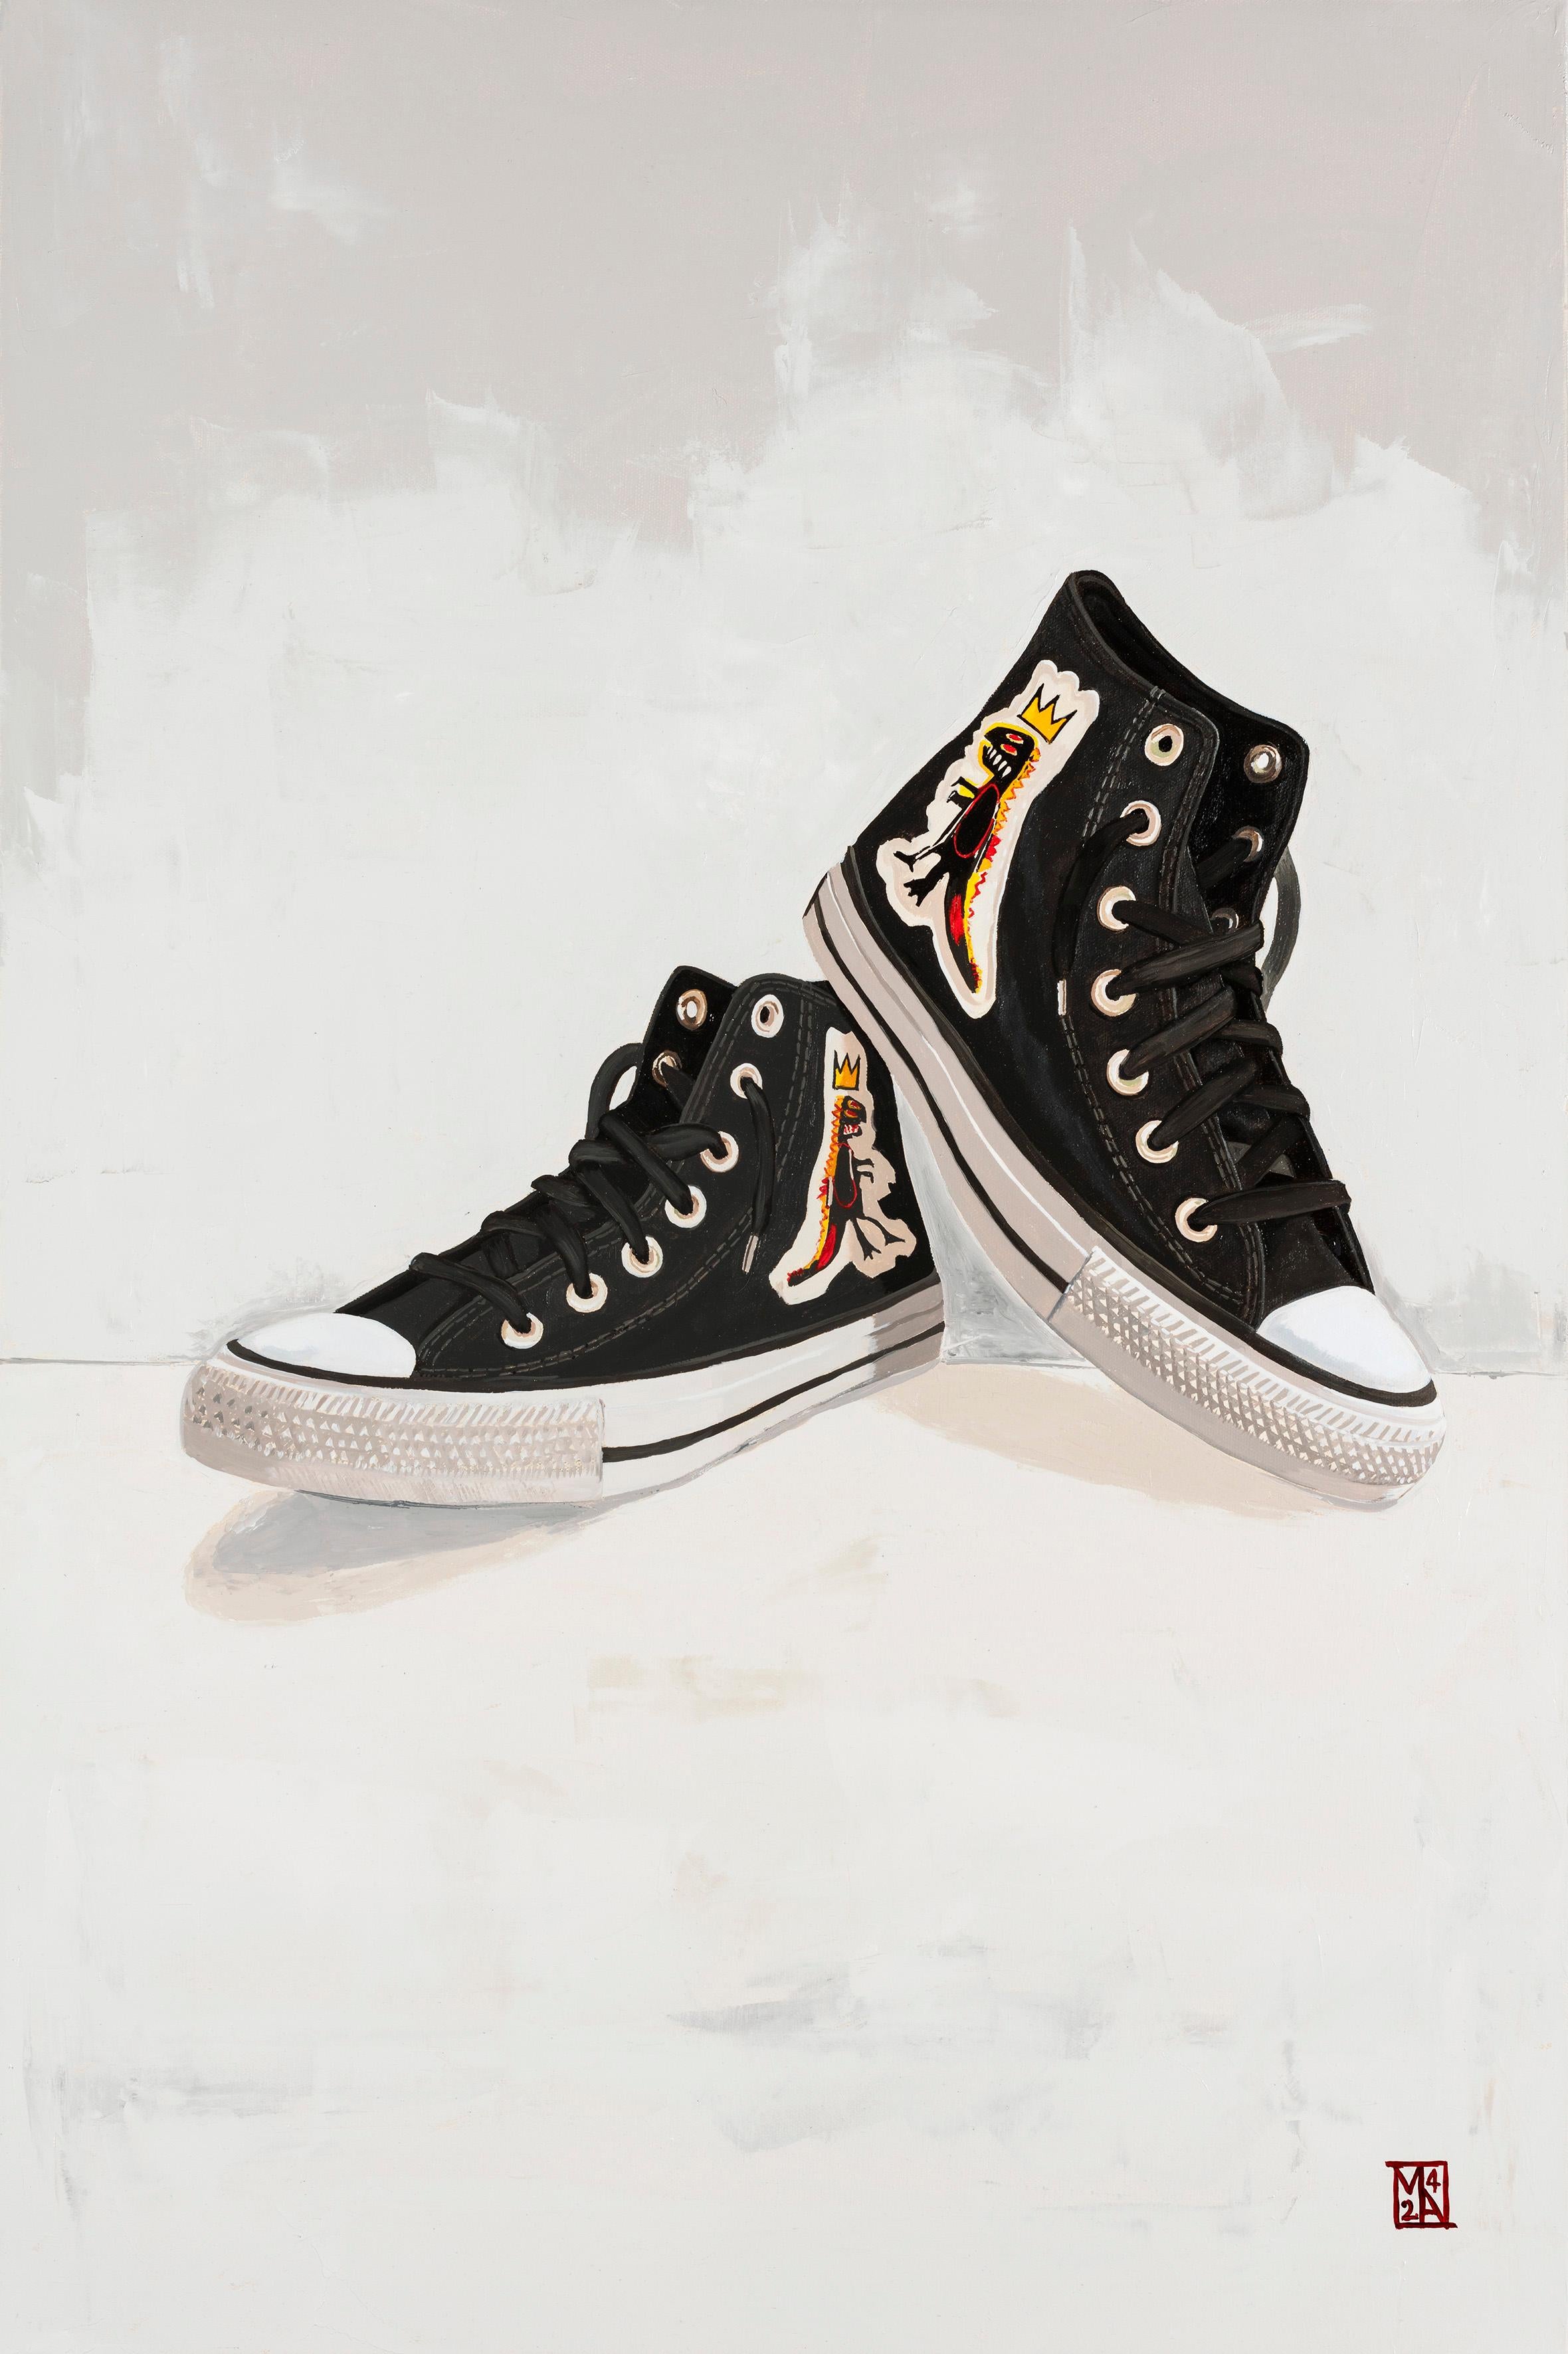 Basquiat Convers Sneakers Art by Martin Allen – Iconic Pop Culture Meets Vintage